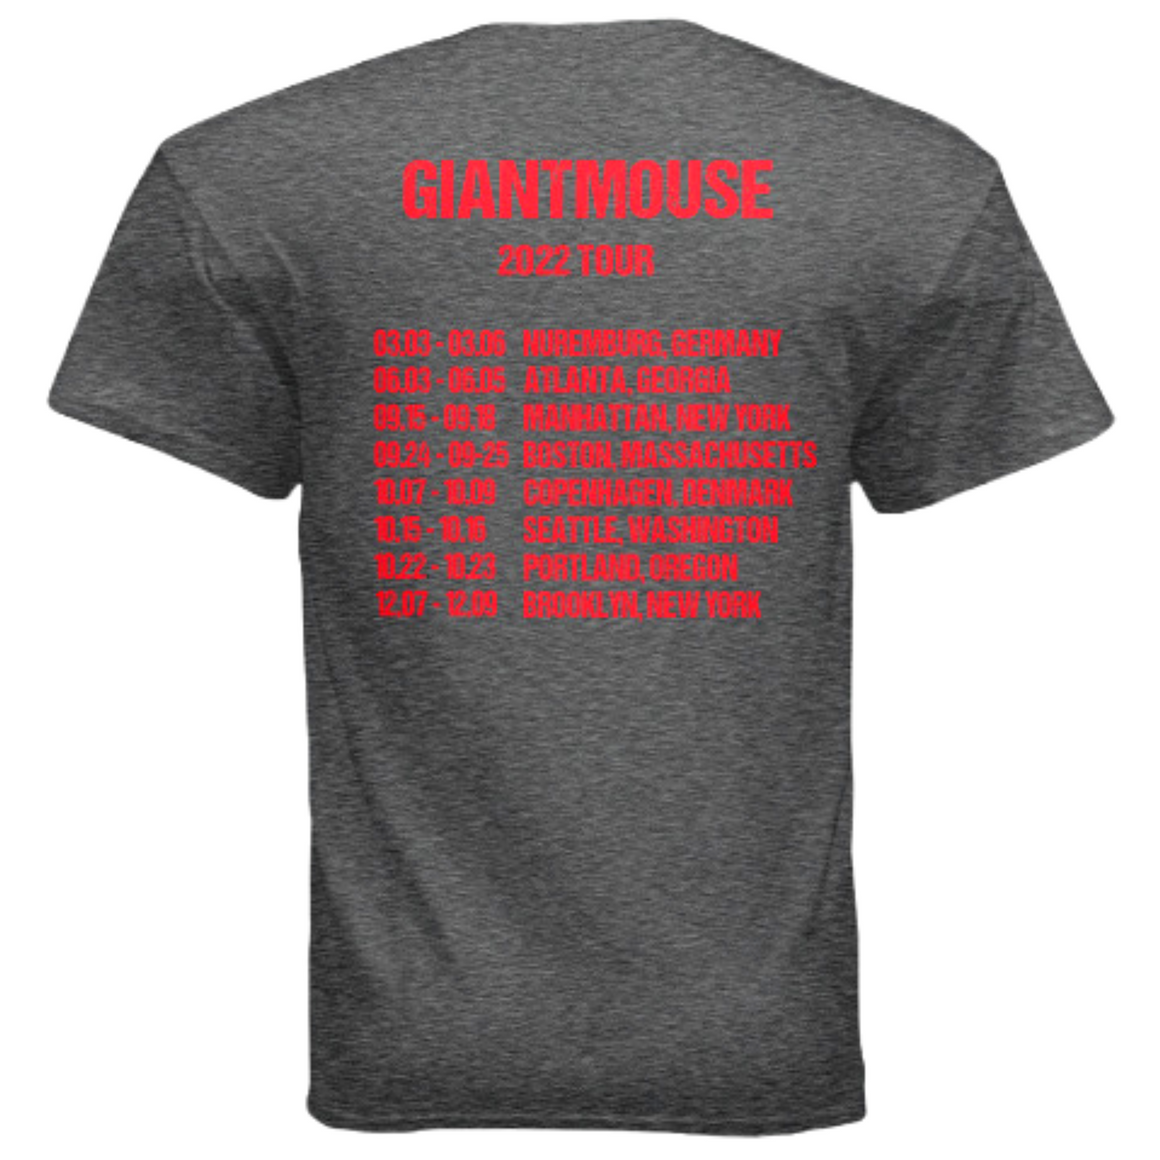 GiantMouse 2022 Tour Shirt